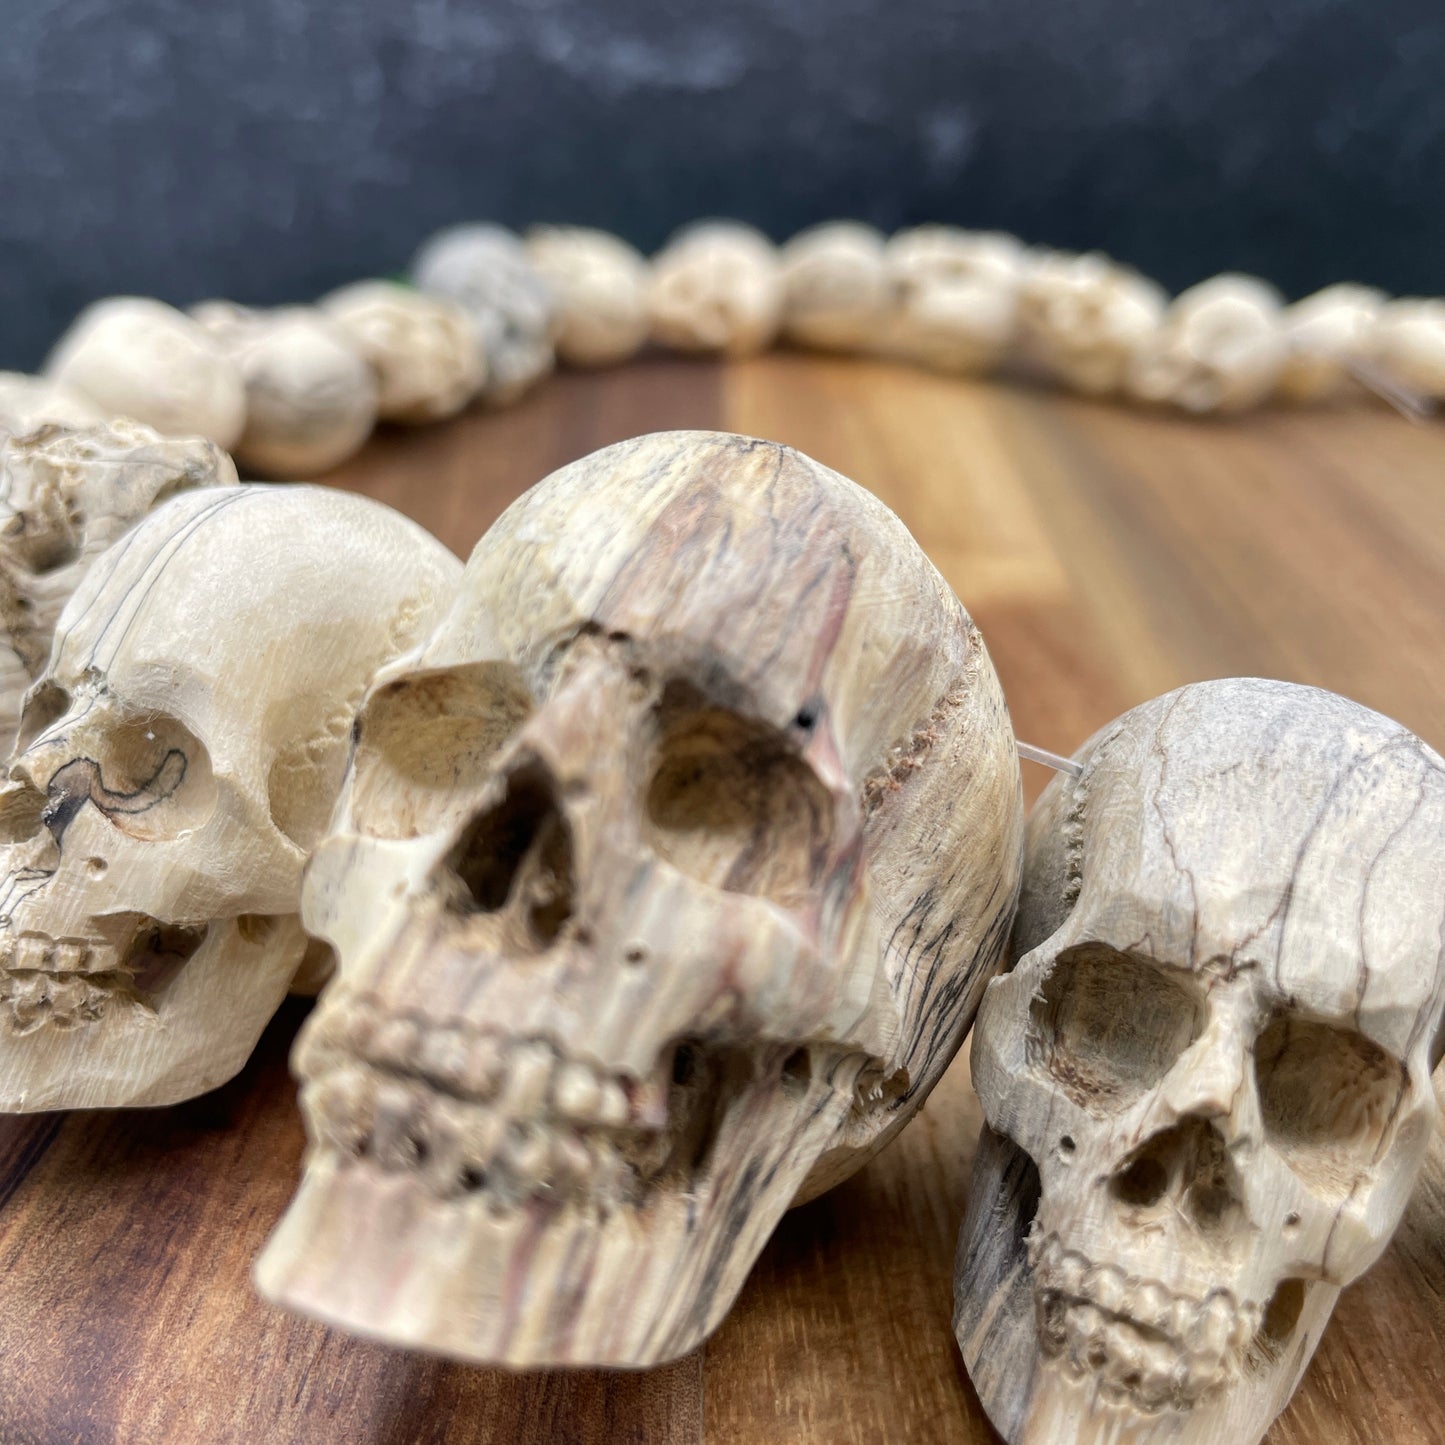 Tamarind Wood 28 inch Skull Necklace